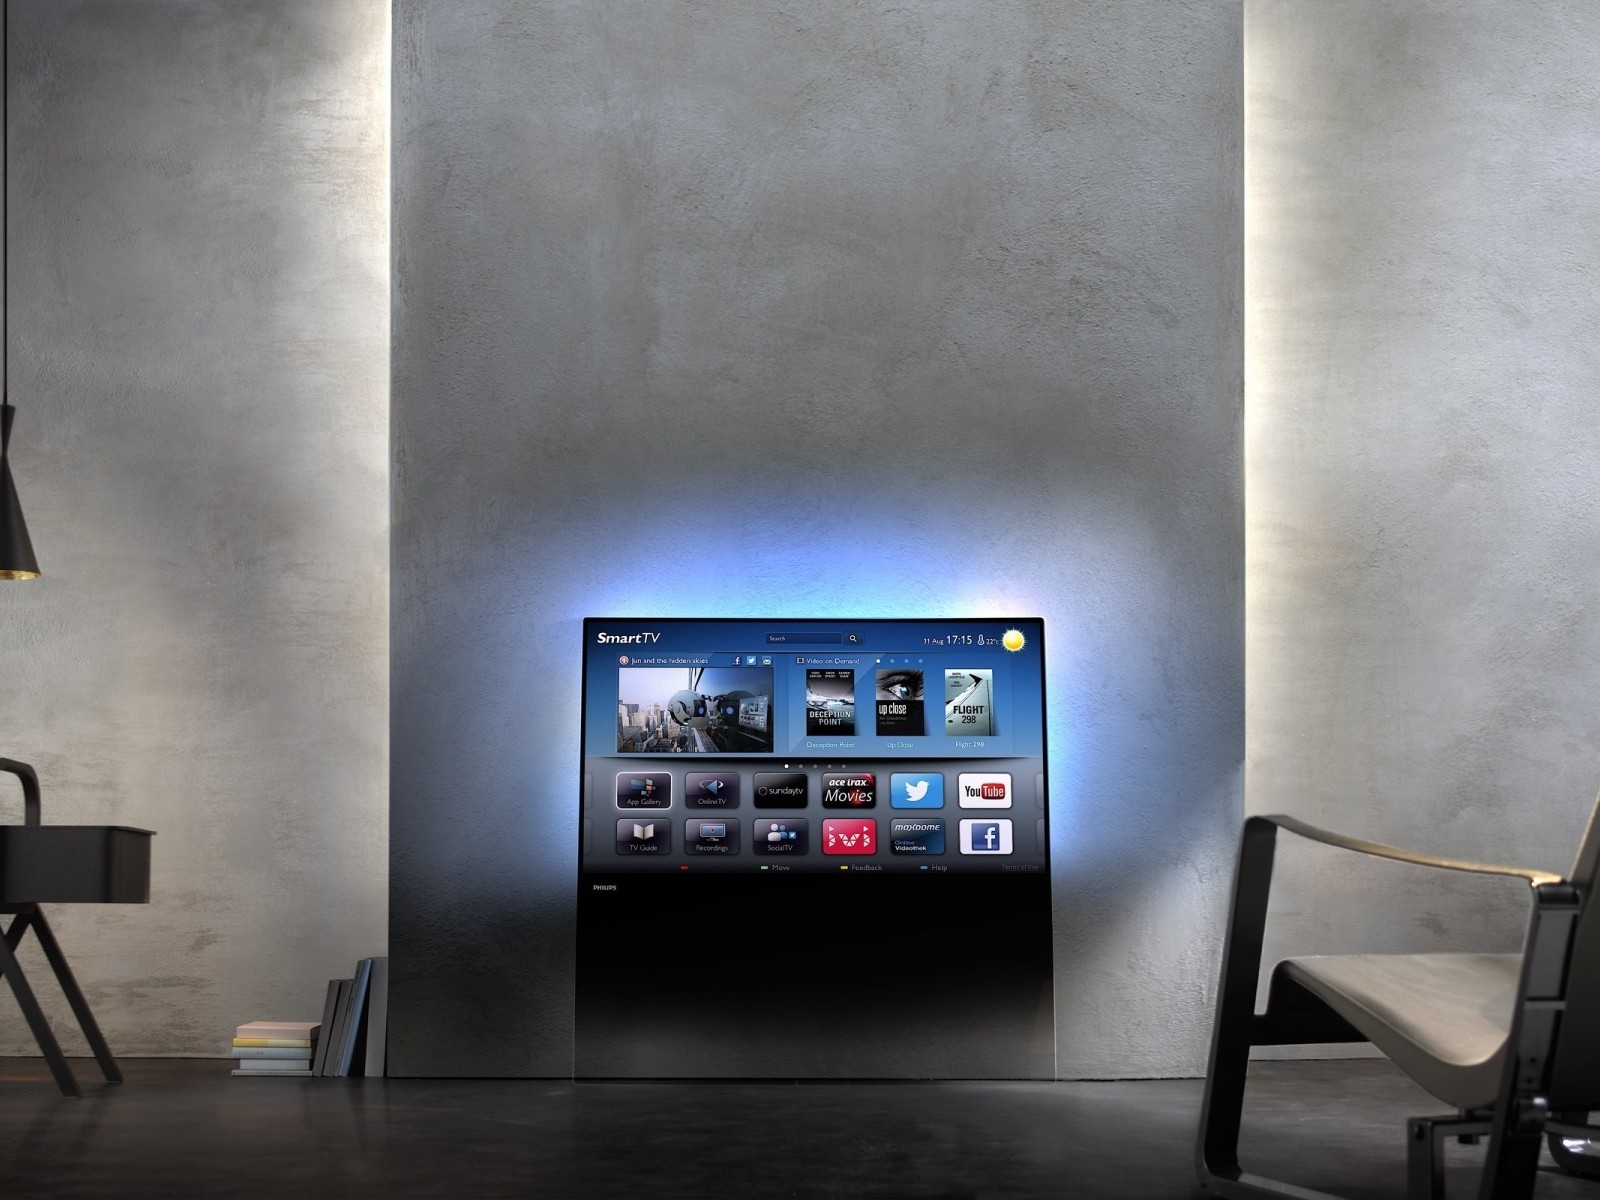 New Philips DesignLine TV for 1600 x 1200 resolution